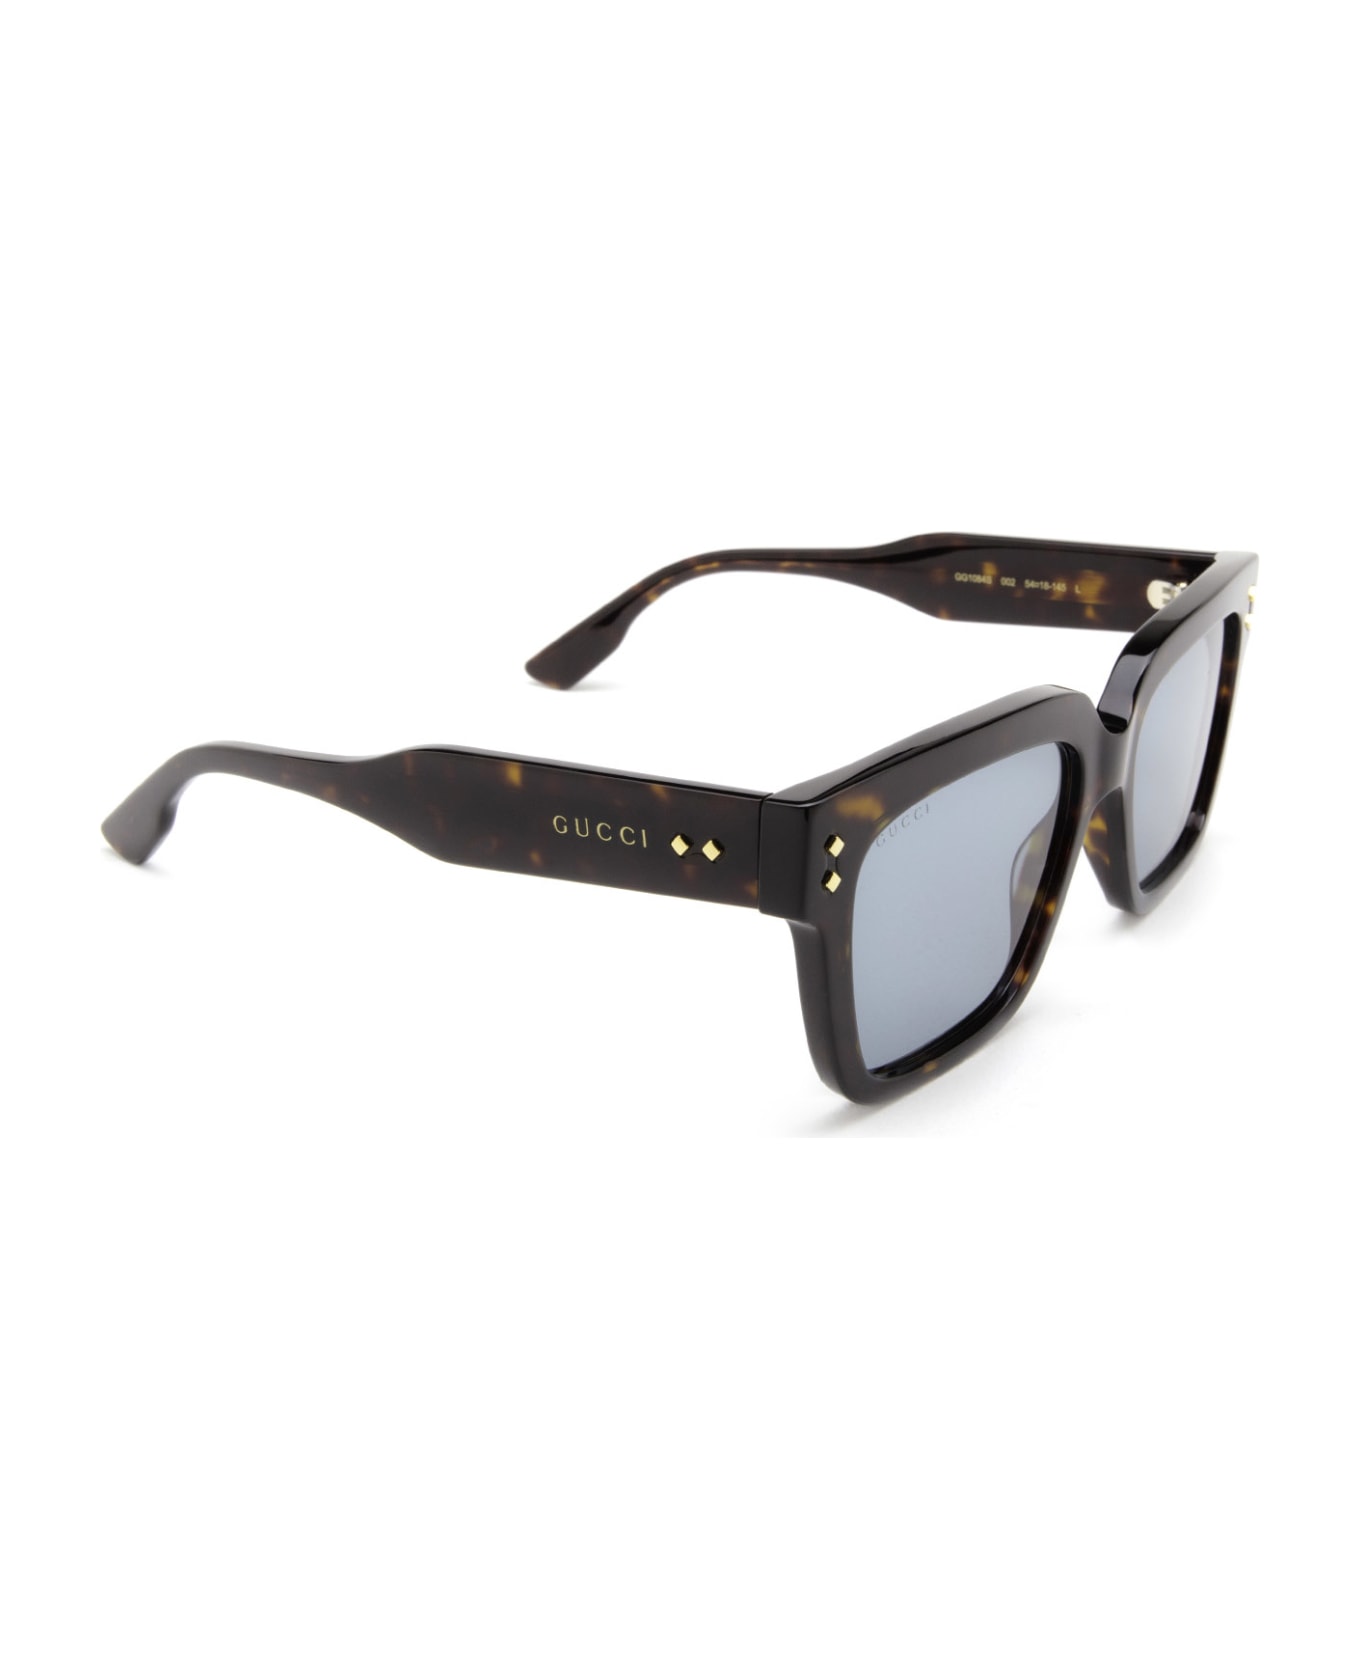 Gucci Eyewear Gg1084s Havana Sunglasses - Havana サングラス